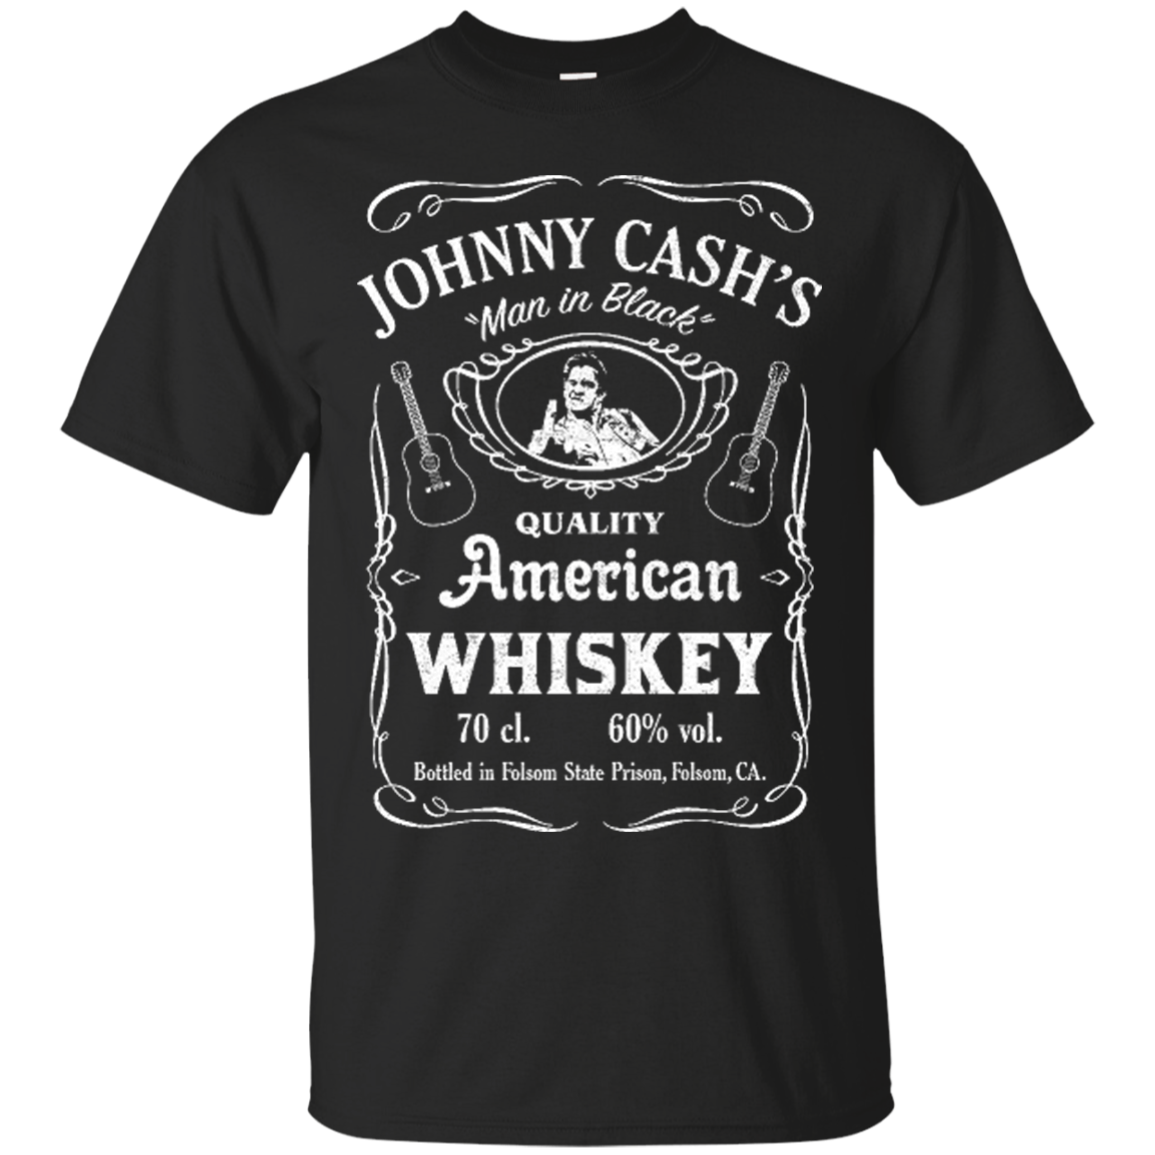 Johnny Cash Whiskey Shirts Man In Black Quality American T shirts ...